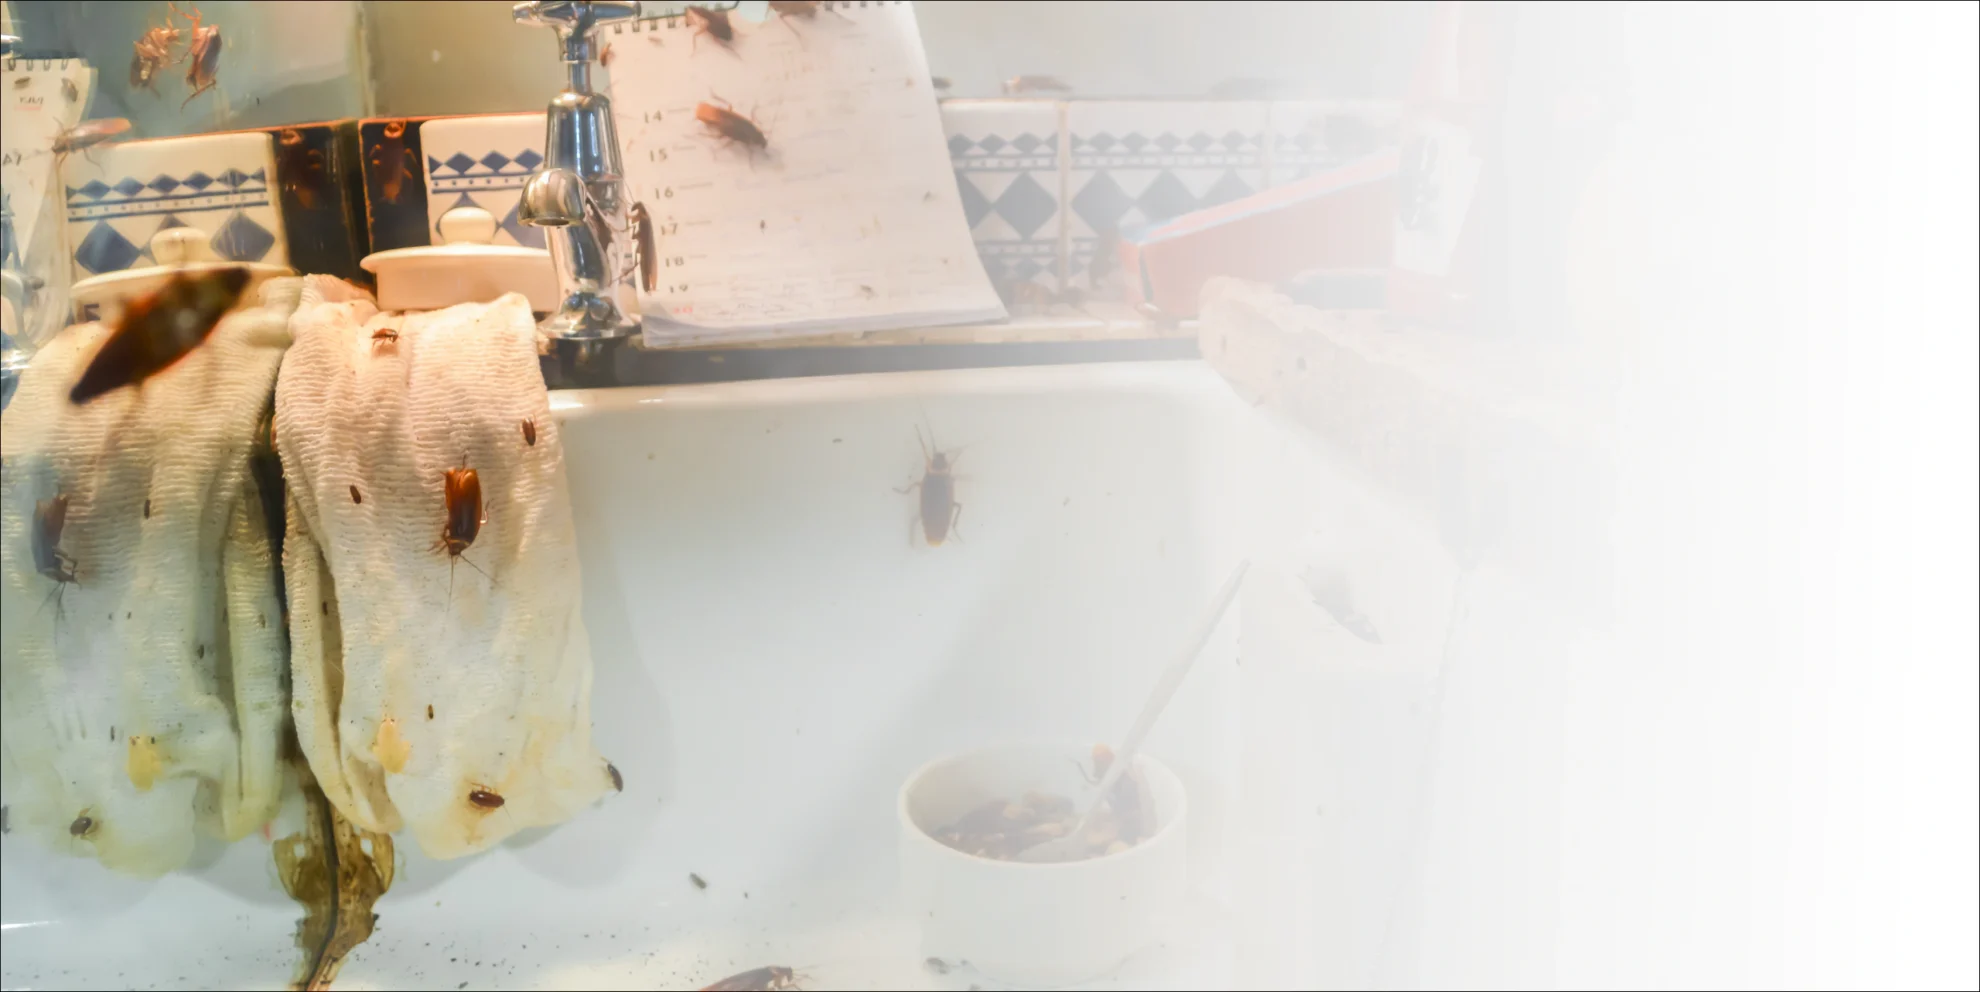 cockroaches on kitchen sink